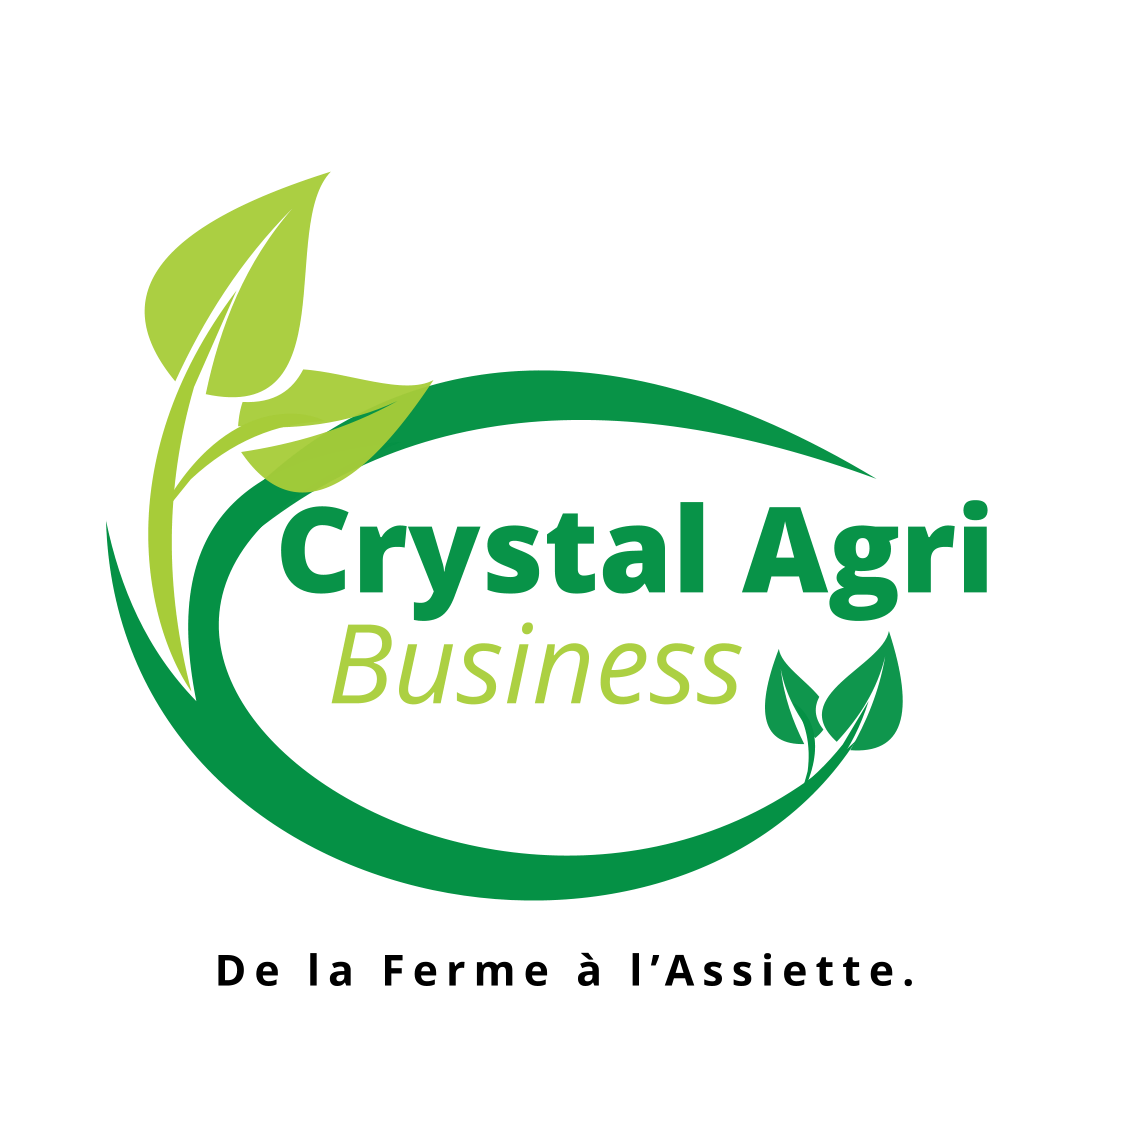 Crystal Agri Business